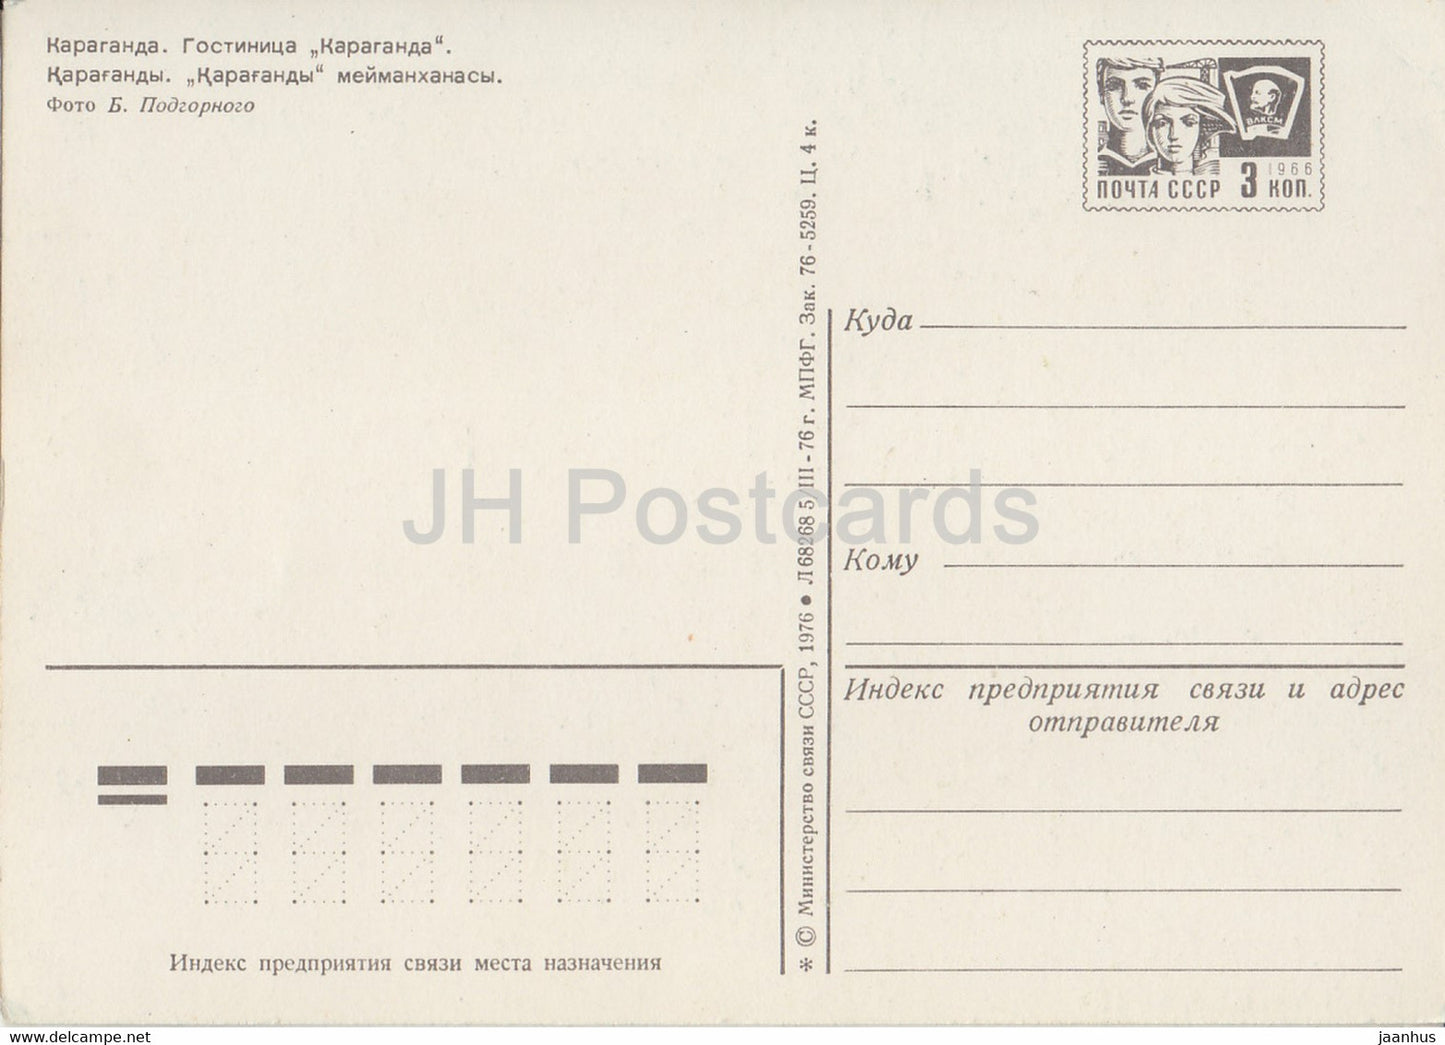 Karaganda - Karagandy - hôtel - bus - entier postal - 1976 - Kazakhstan URSS - inutilisé